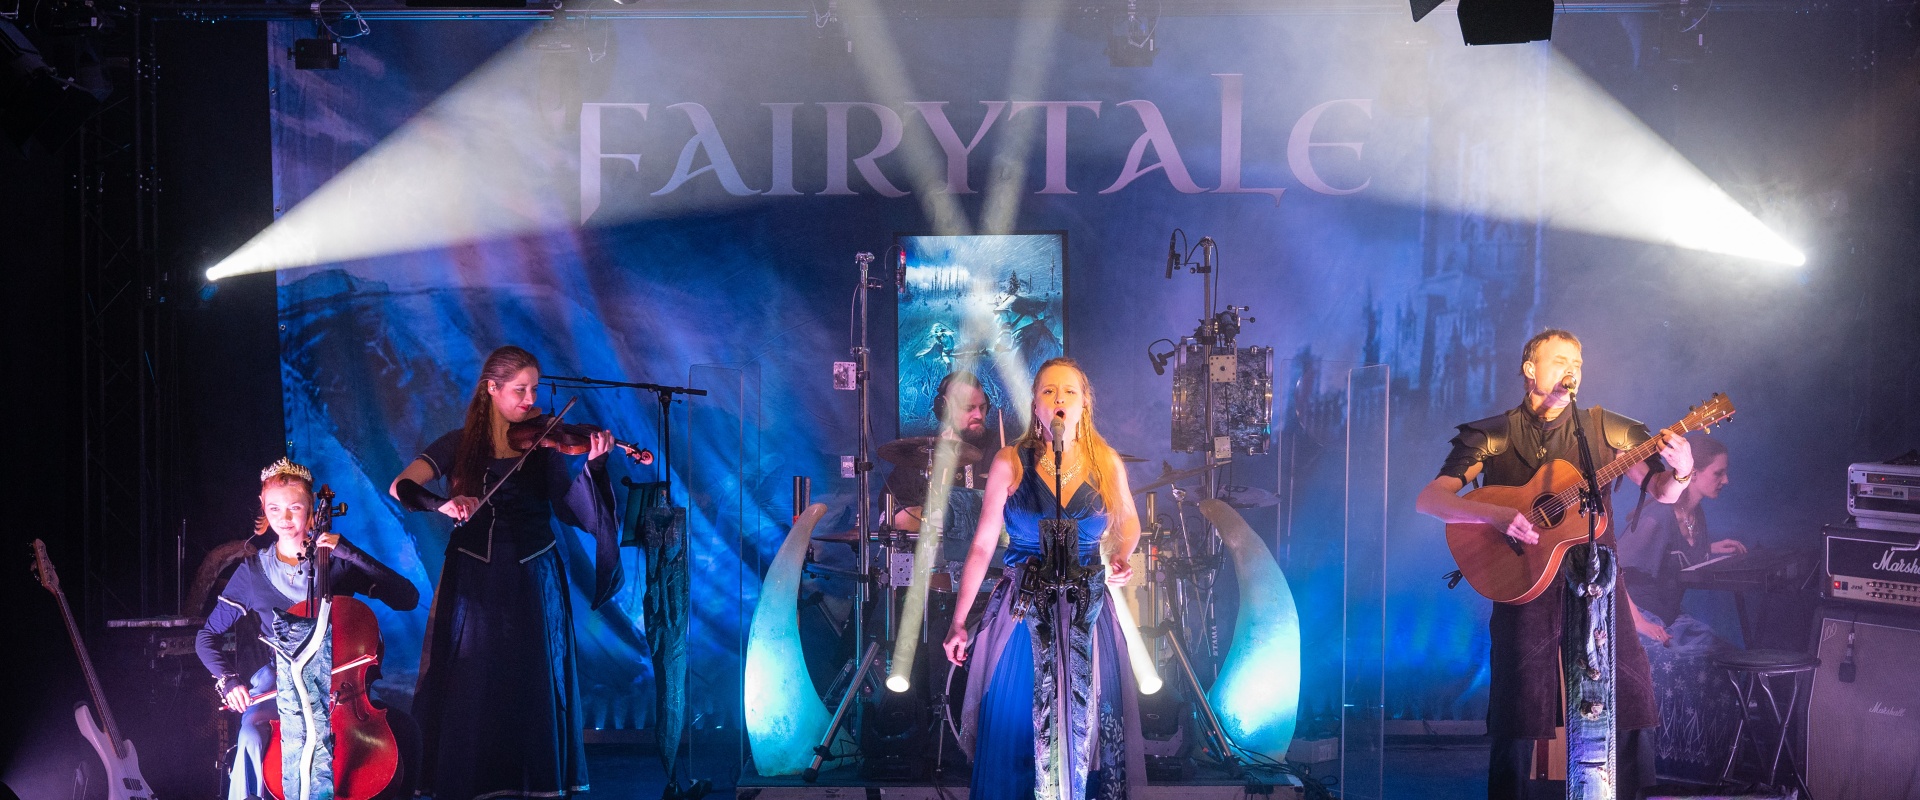 Fairytale live 1 Andreas Gladis1